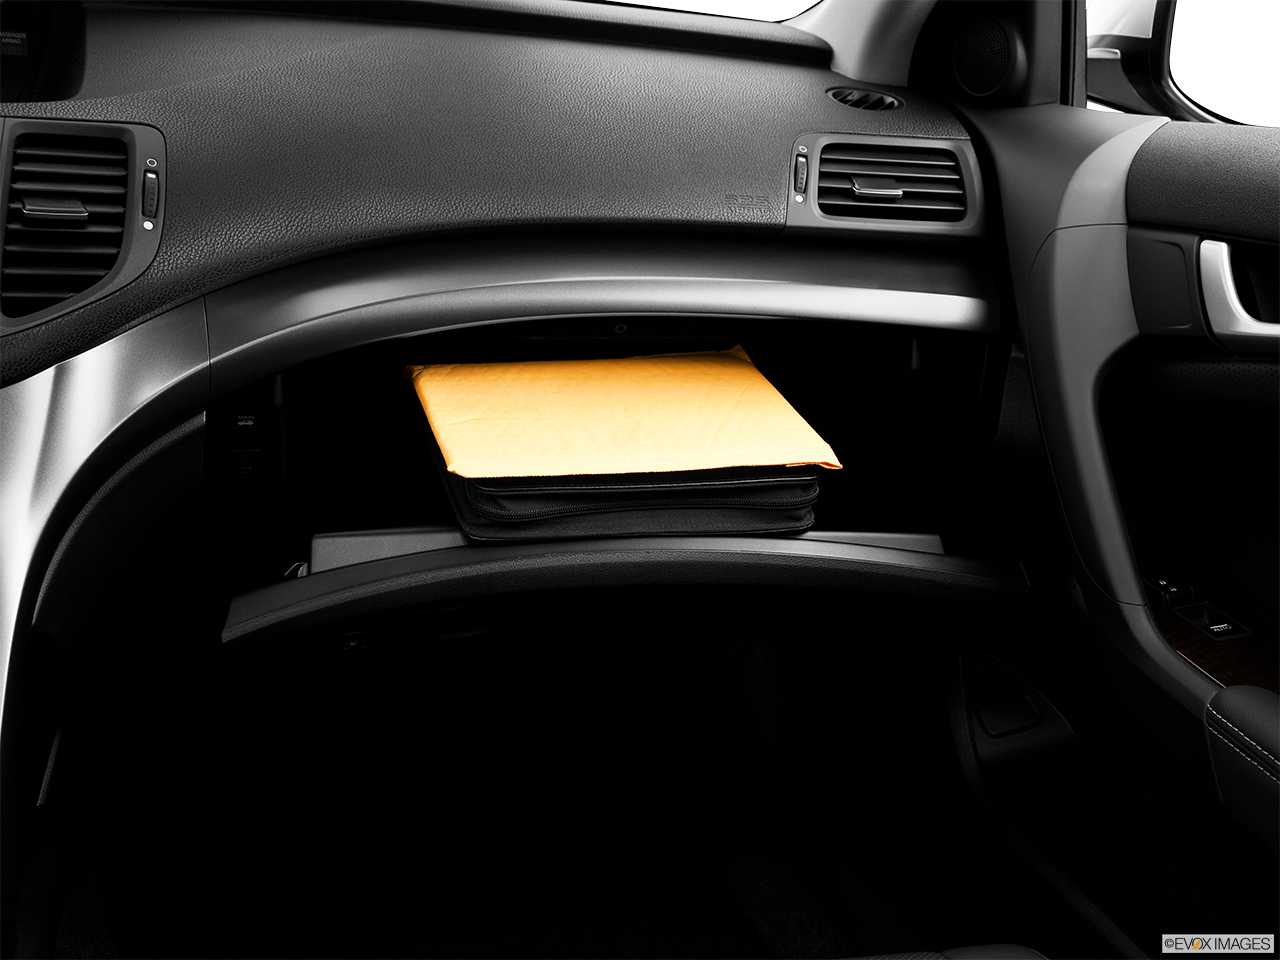 2013 Acura TSX 5-speed Automatic Glove box open. 